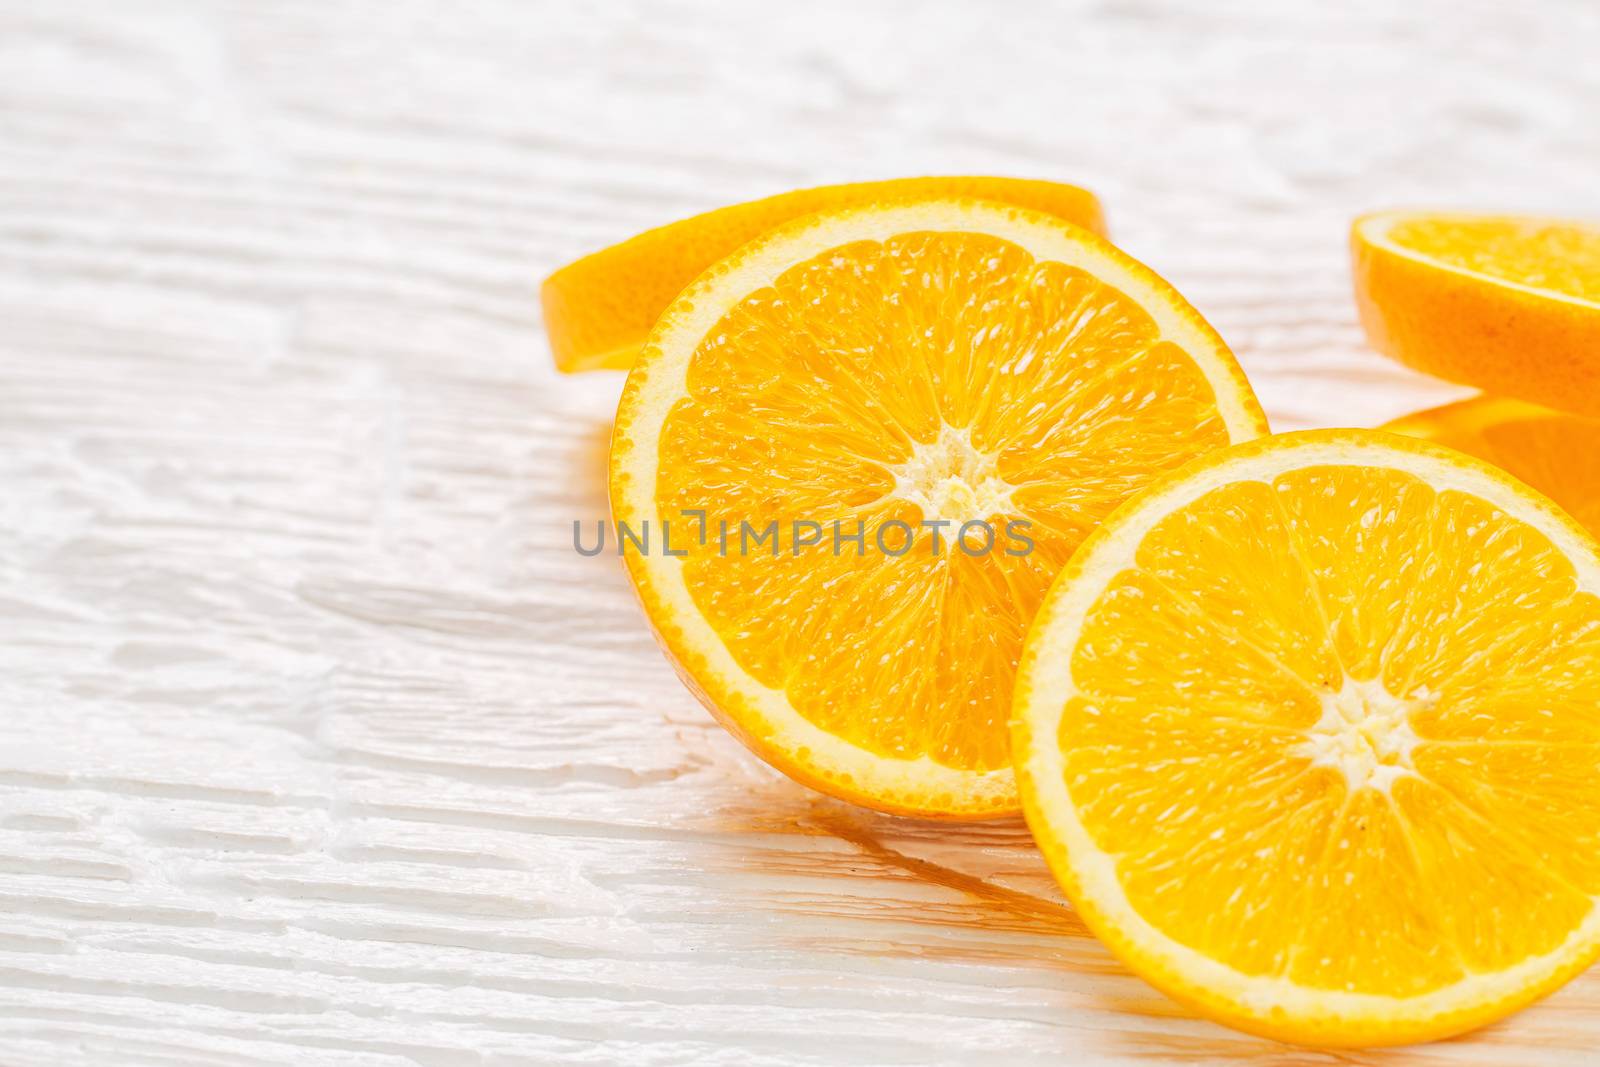 Slice a fresh juicy orange round orange